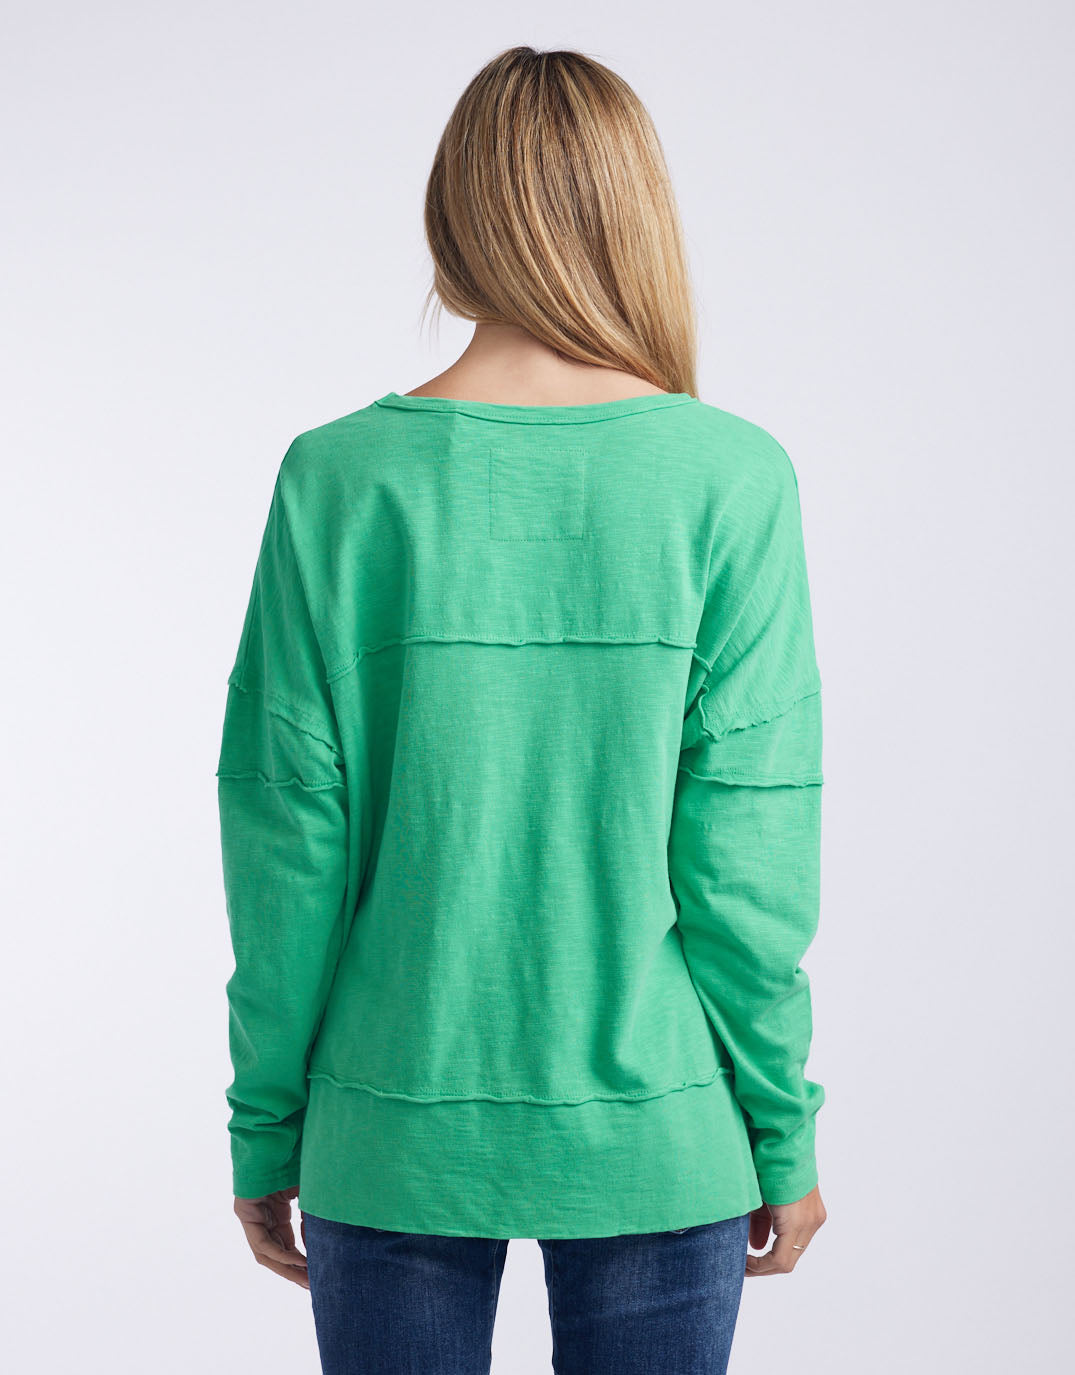 foxwood-jayne-throw-on-top-emerald-womens-clothing